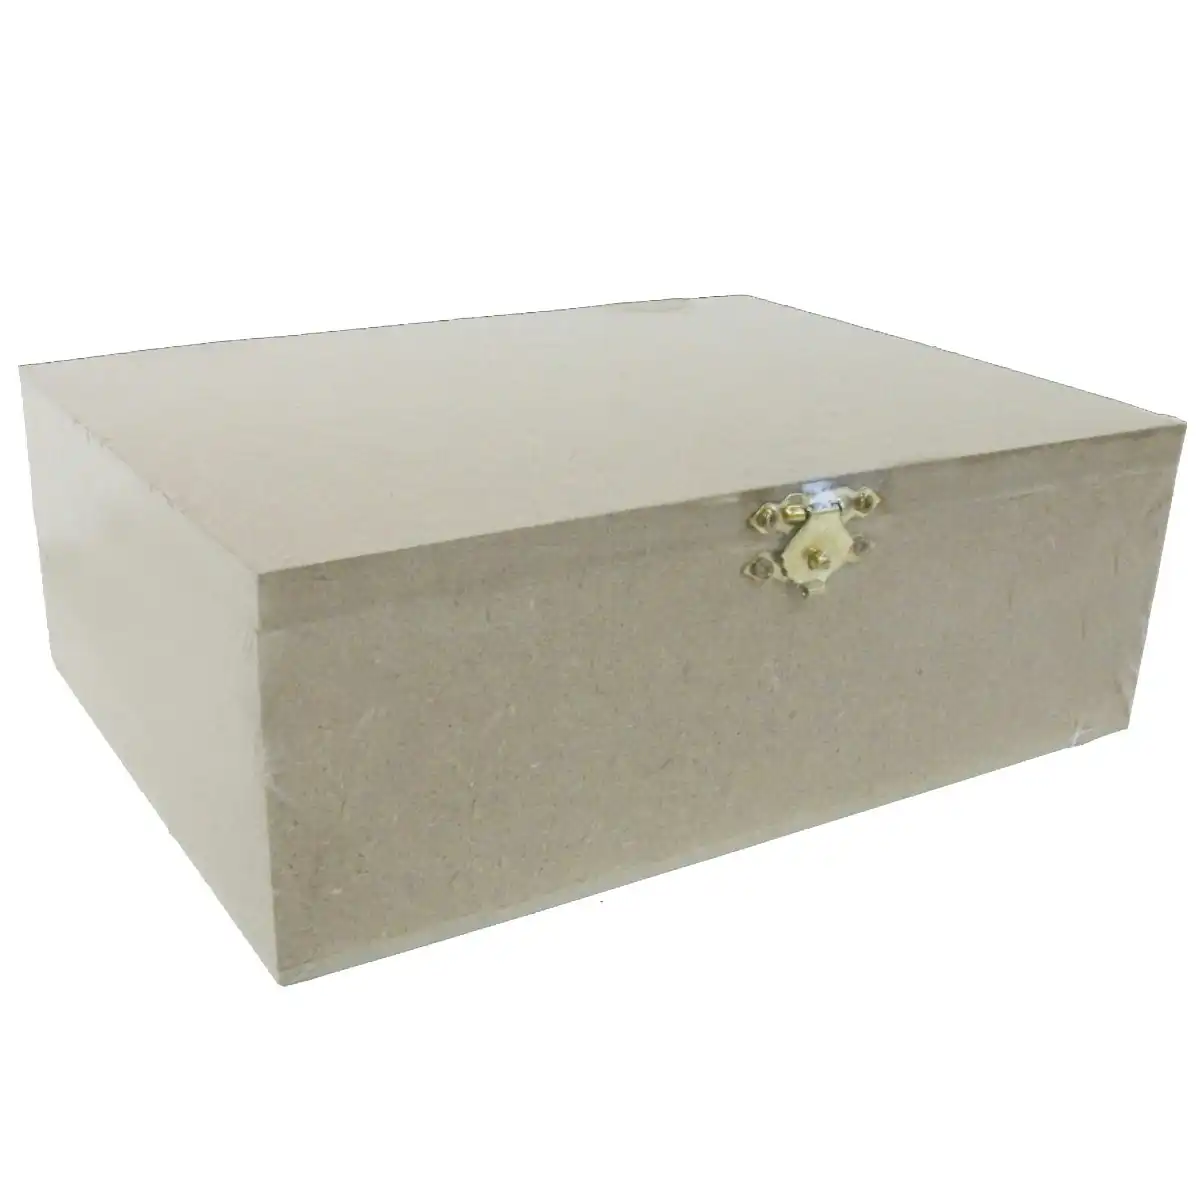 Boyle Craftwood 20x14.5cm Art/Craft Wooden Storage Box Organiser w/ Catch Medium